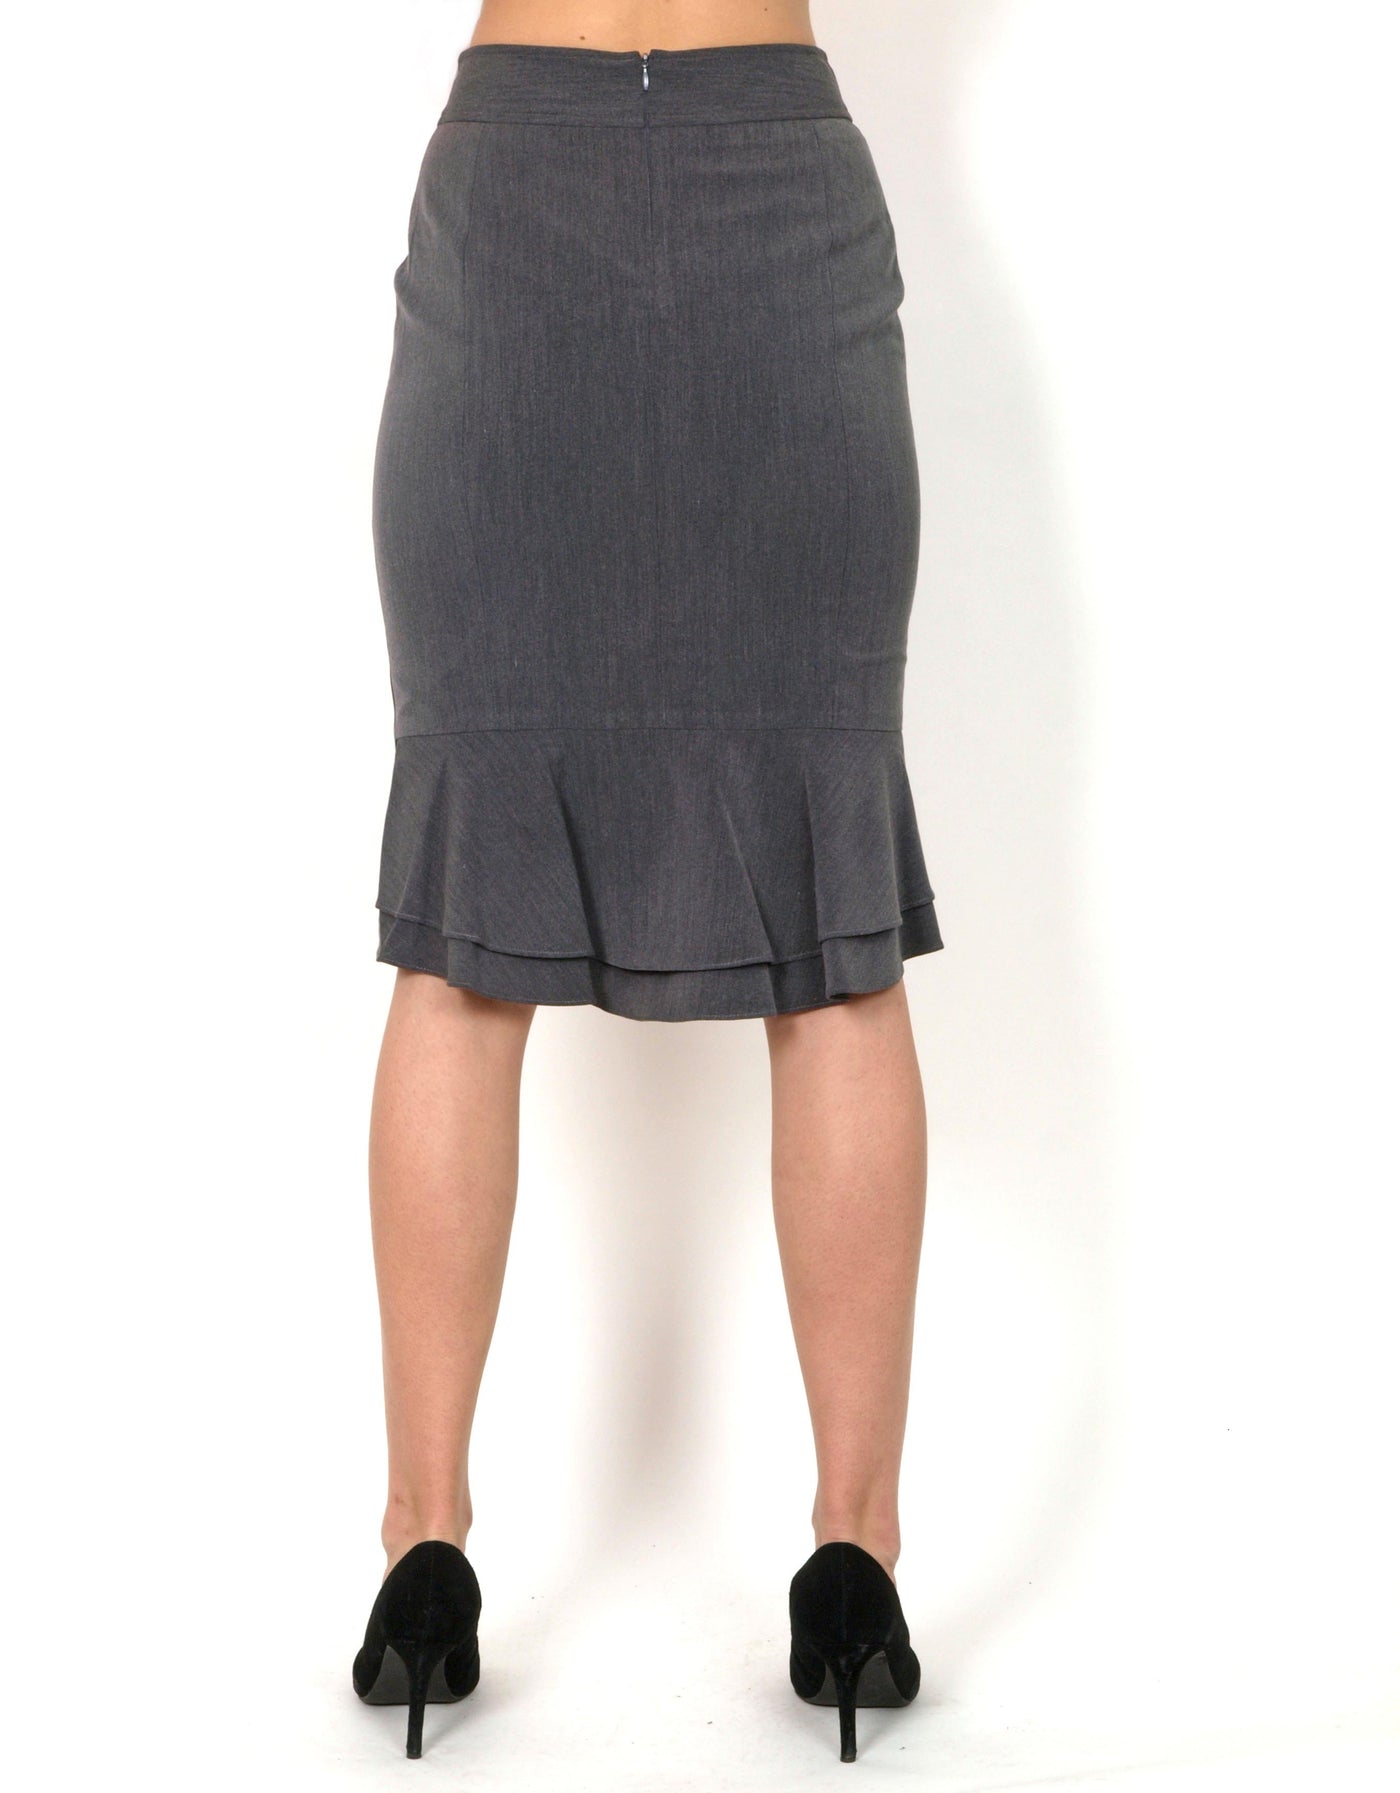 Narrow skirt gray